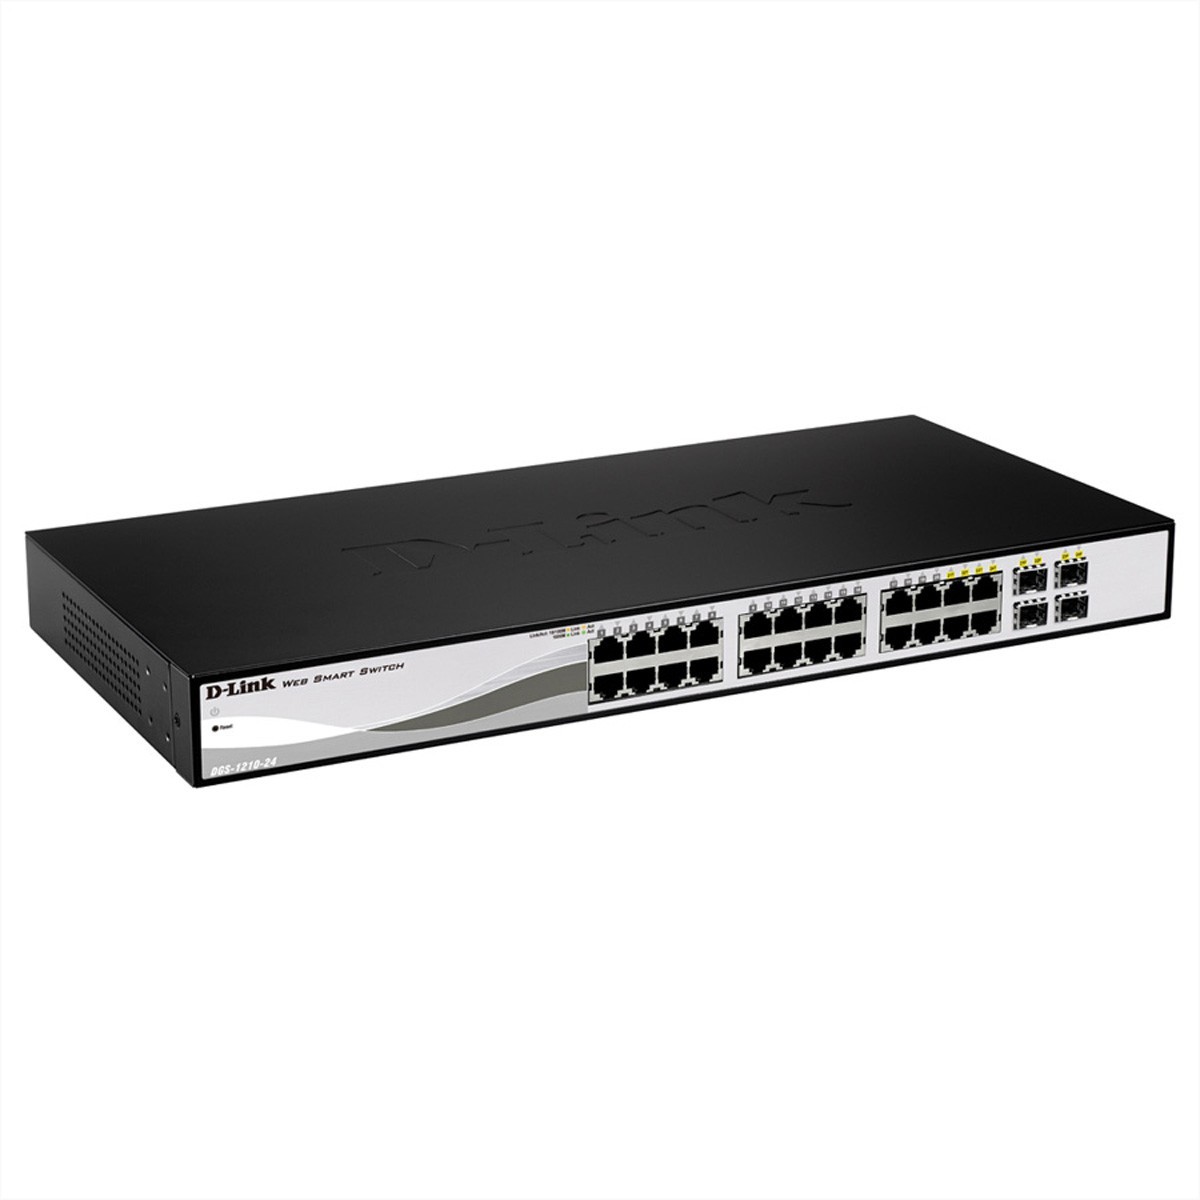 D-Link DGS-1210-24 28-port Gigabit Smart Switch, 24x GbE, 4x RJ45-SFP, fanless